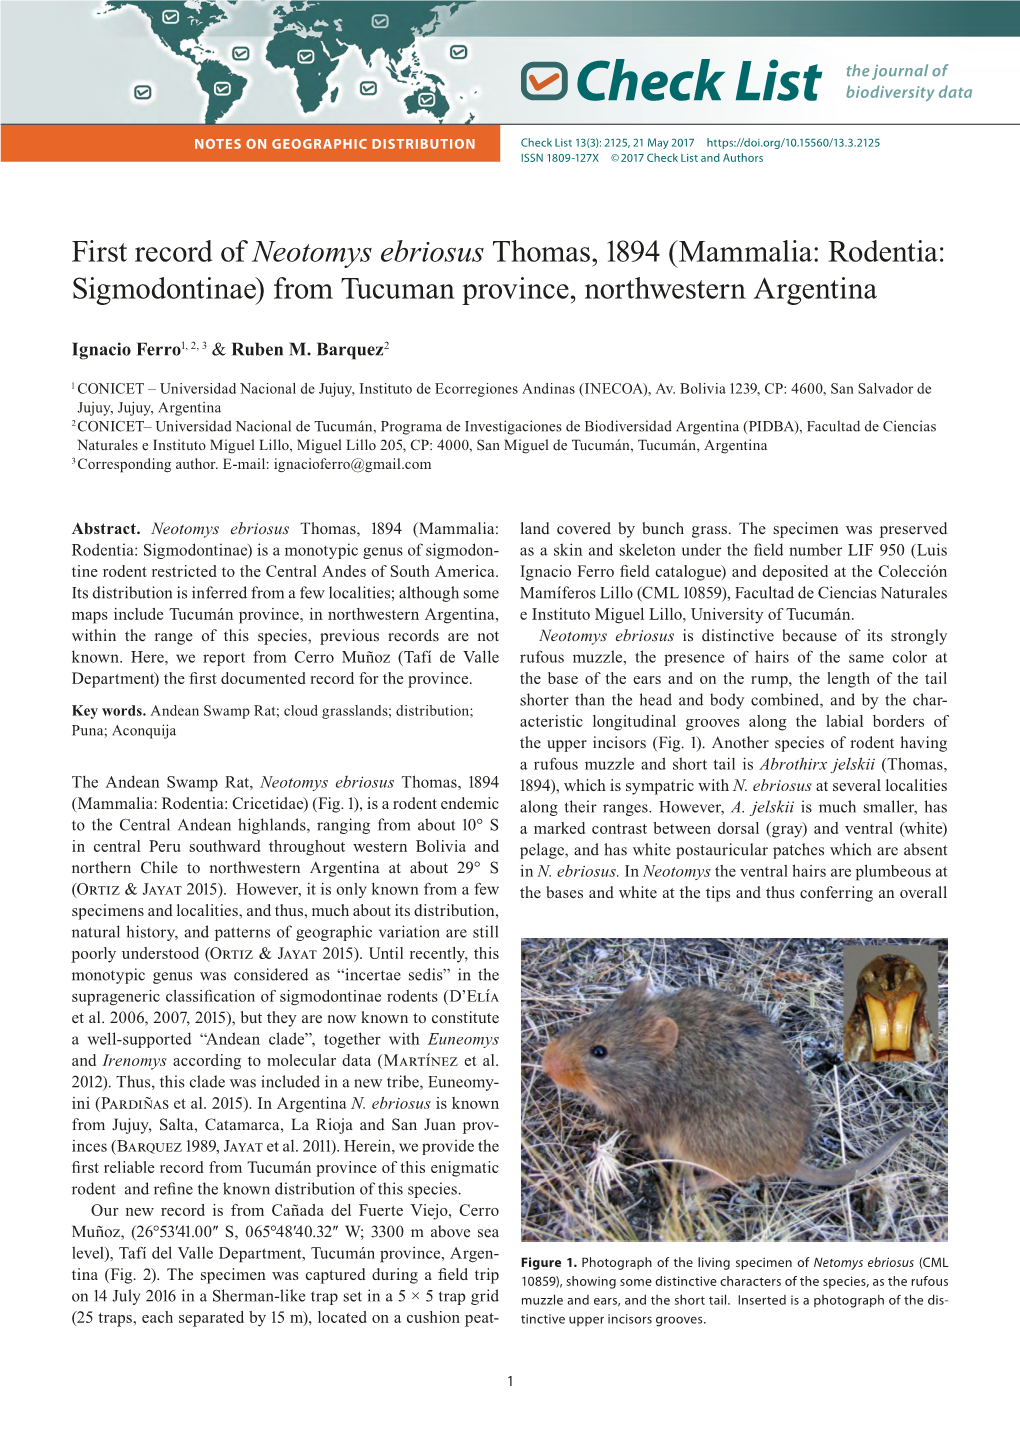 First Record of Neotomys Ebriosus Thomas, 1894 (Mammalia: Rodentia: Sigmodontinae) from Tucuman Province, Northwestern Argentina